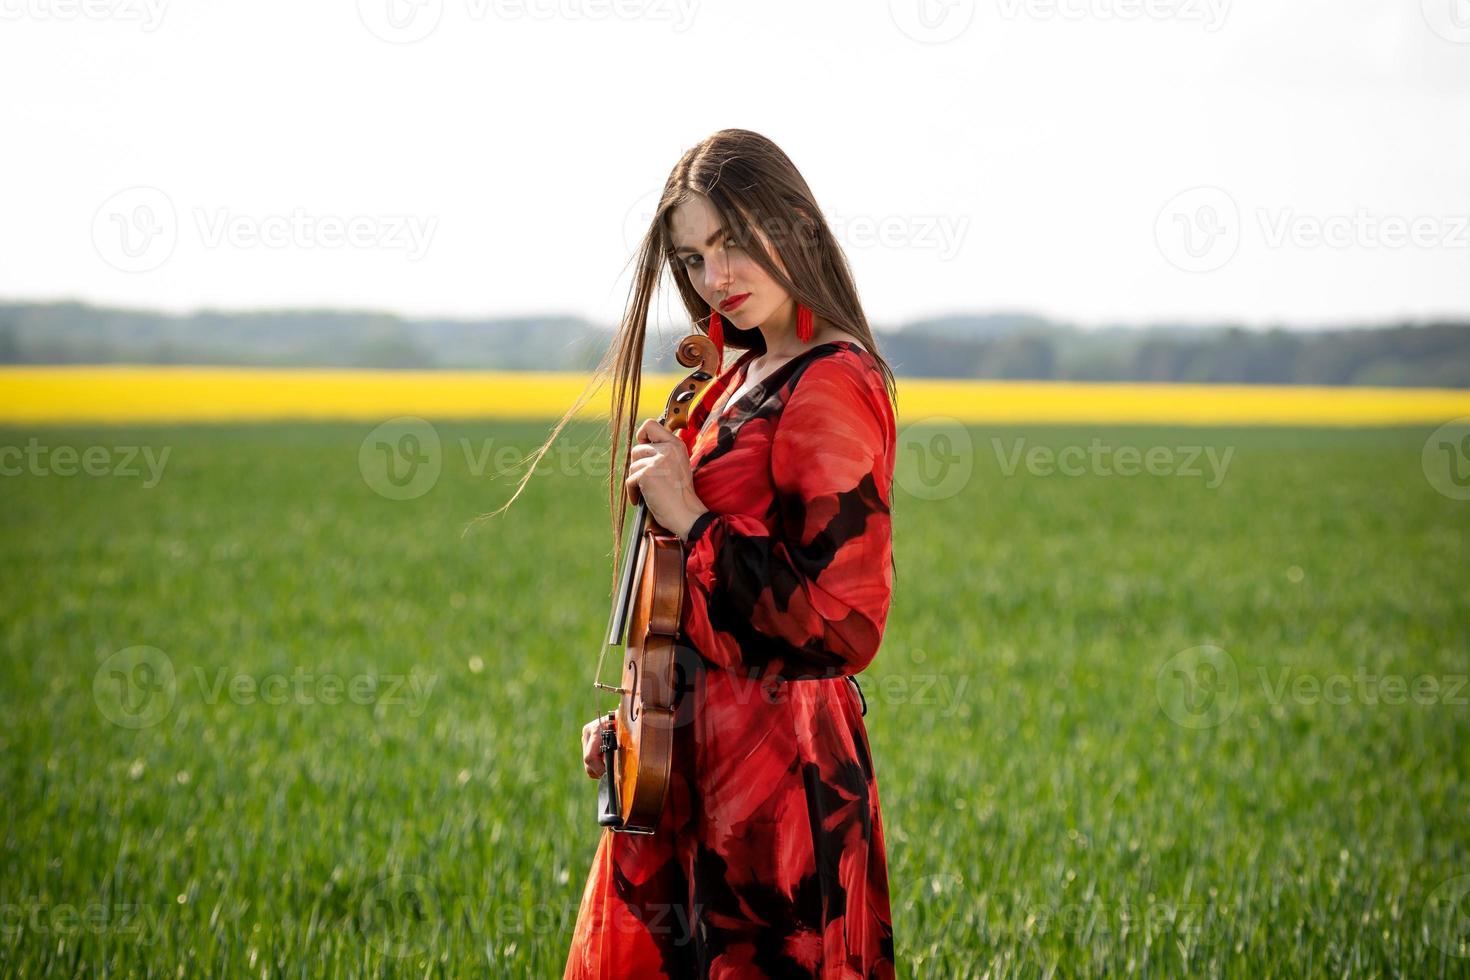 jonge vrouw in rode jurk met viool in groene weide - image foto